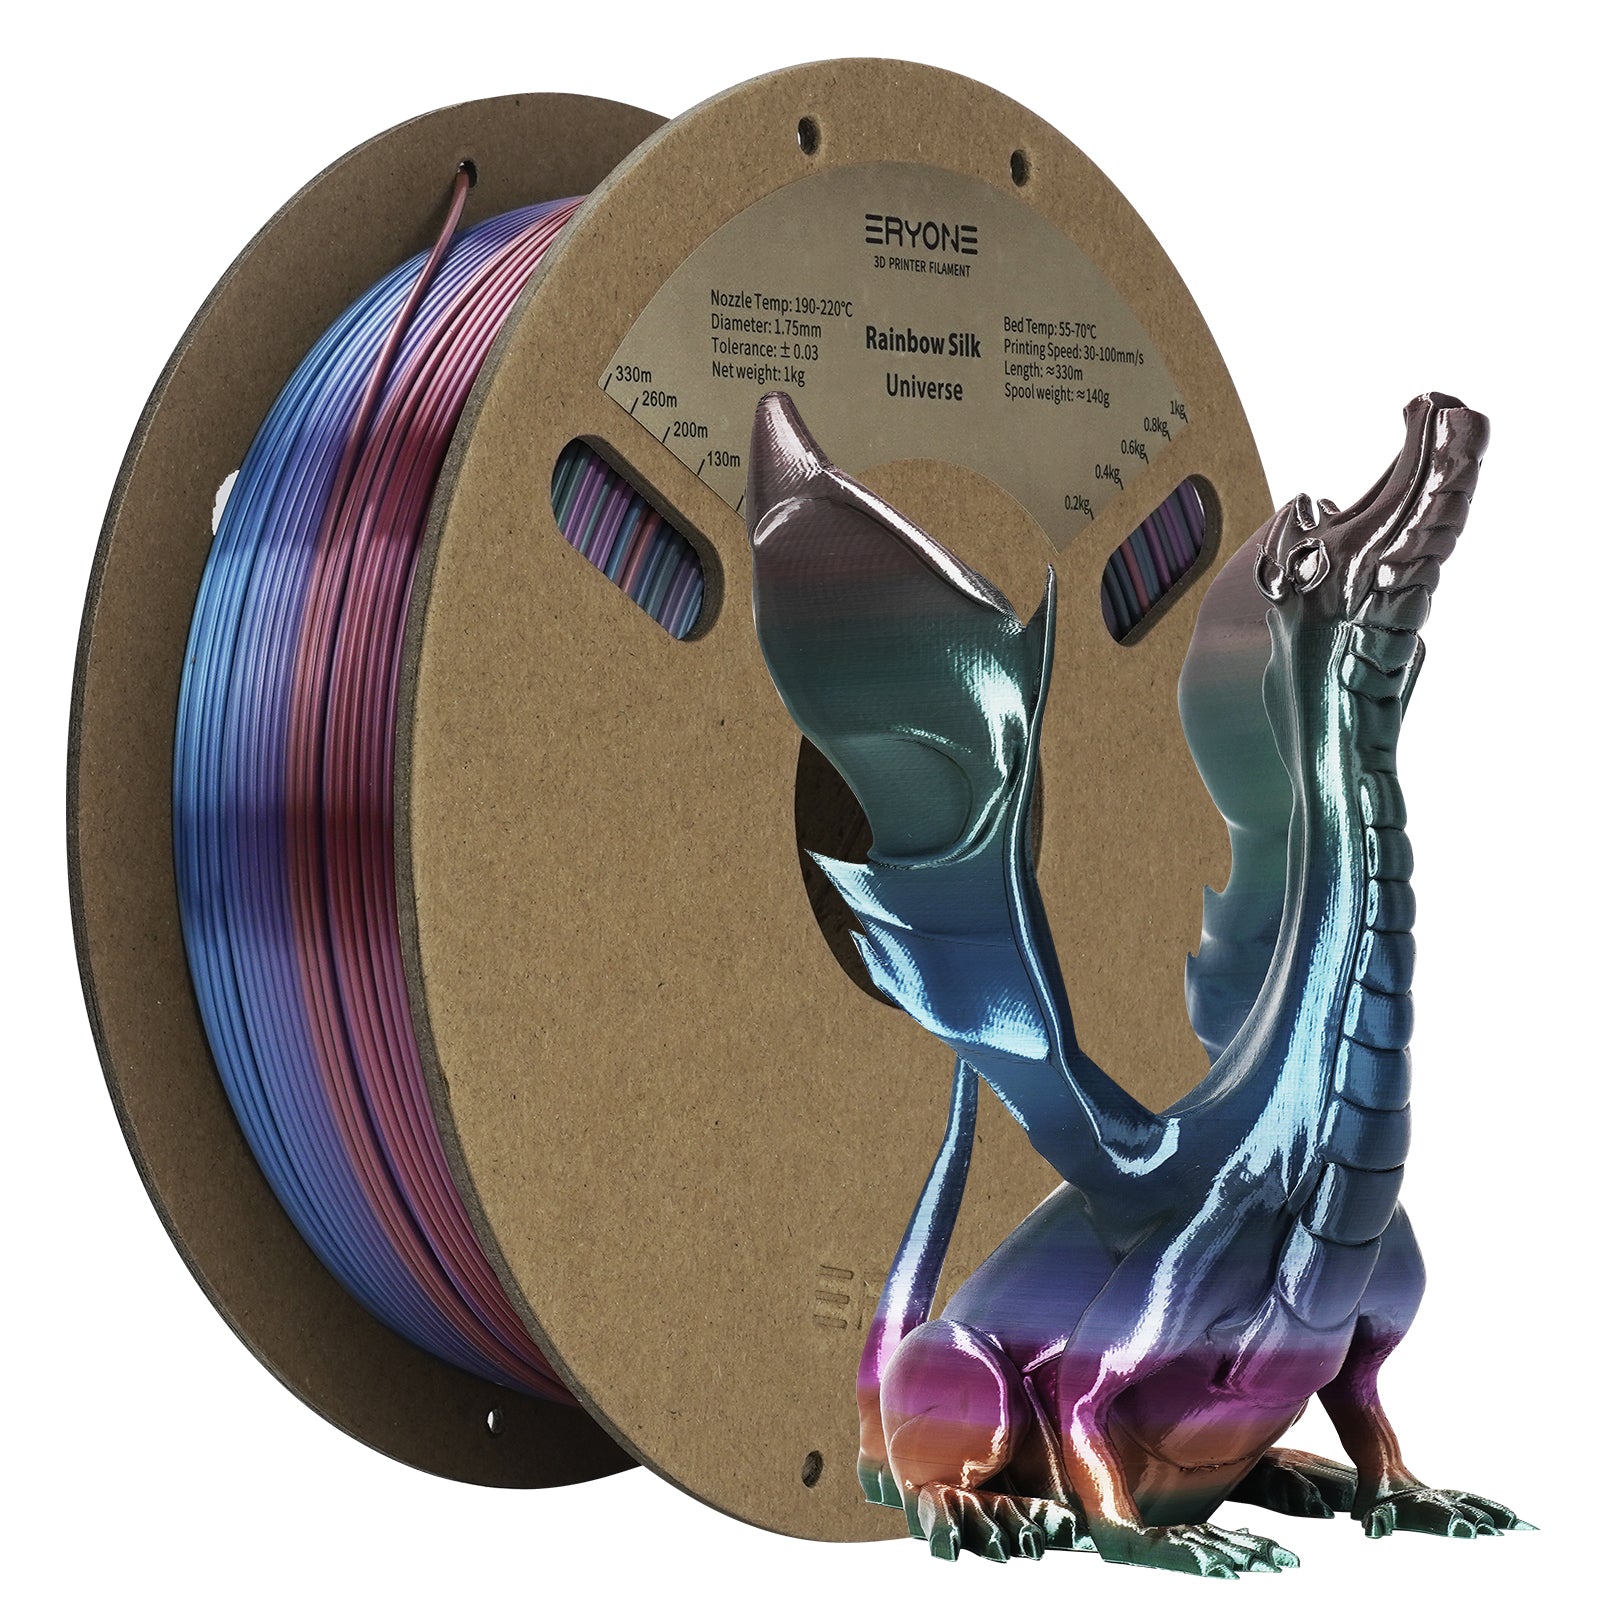 ERYONE Macaron Rainbow Filament PLA 1.75 mm for 3D Printer, +/-0.05 mm, 1 kg / Spool